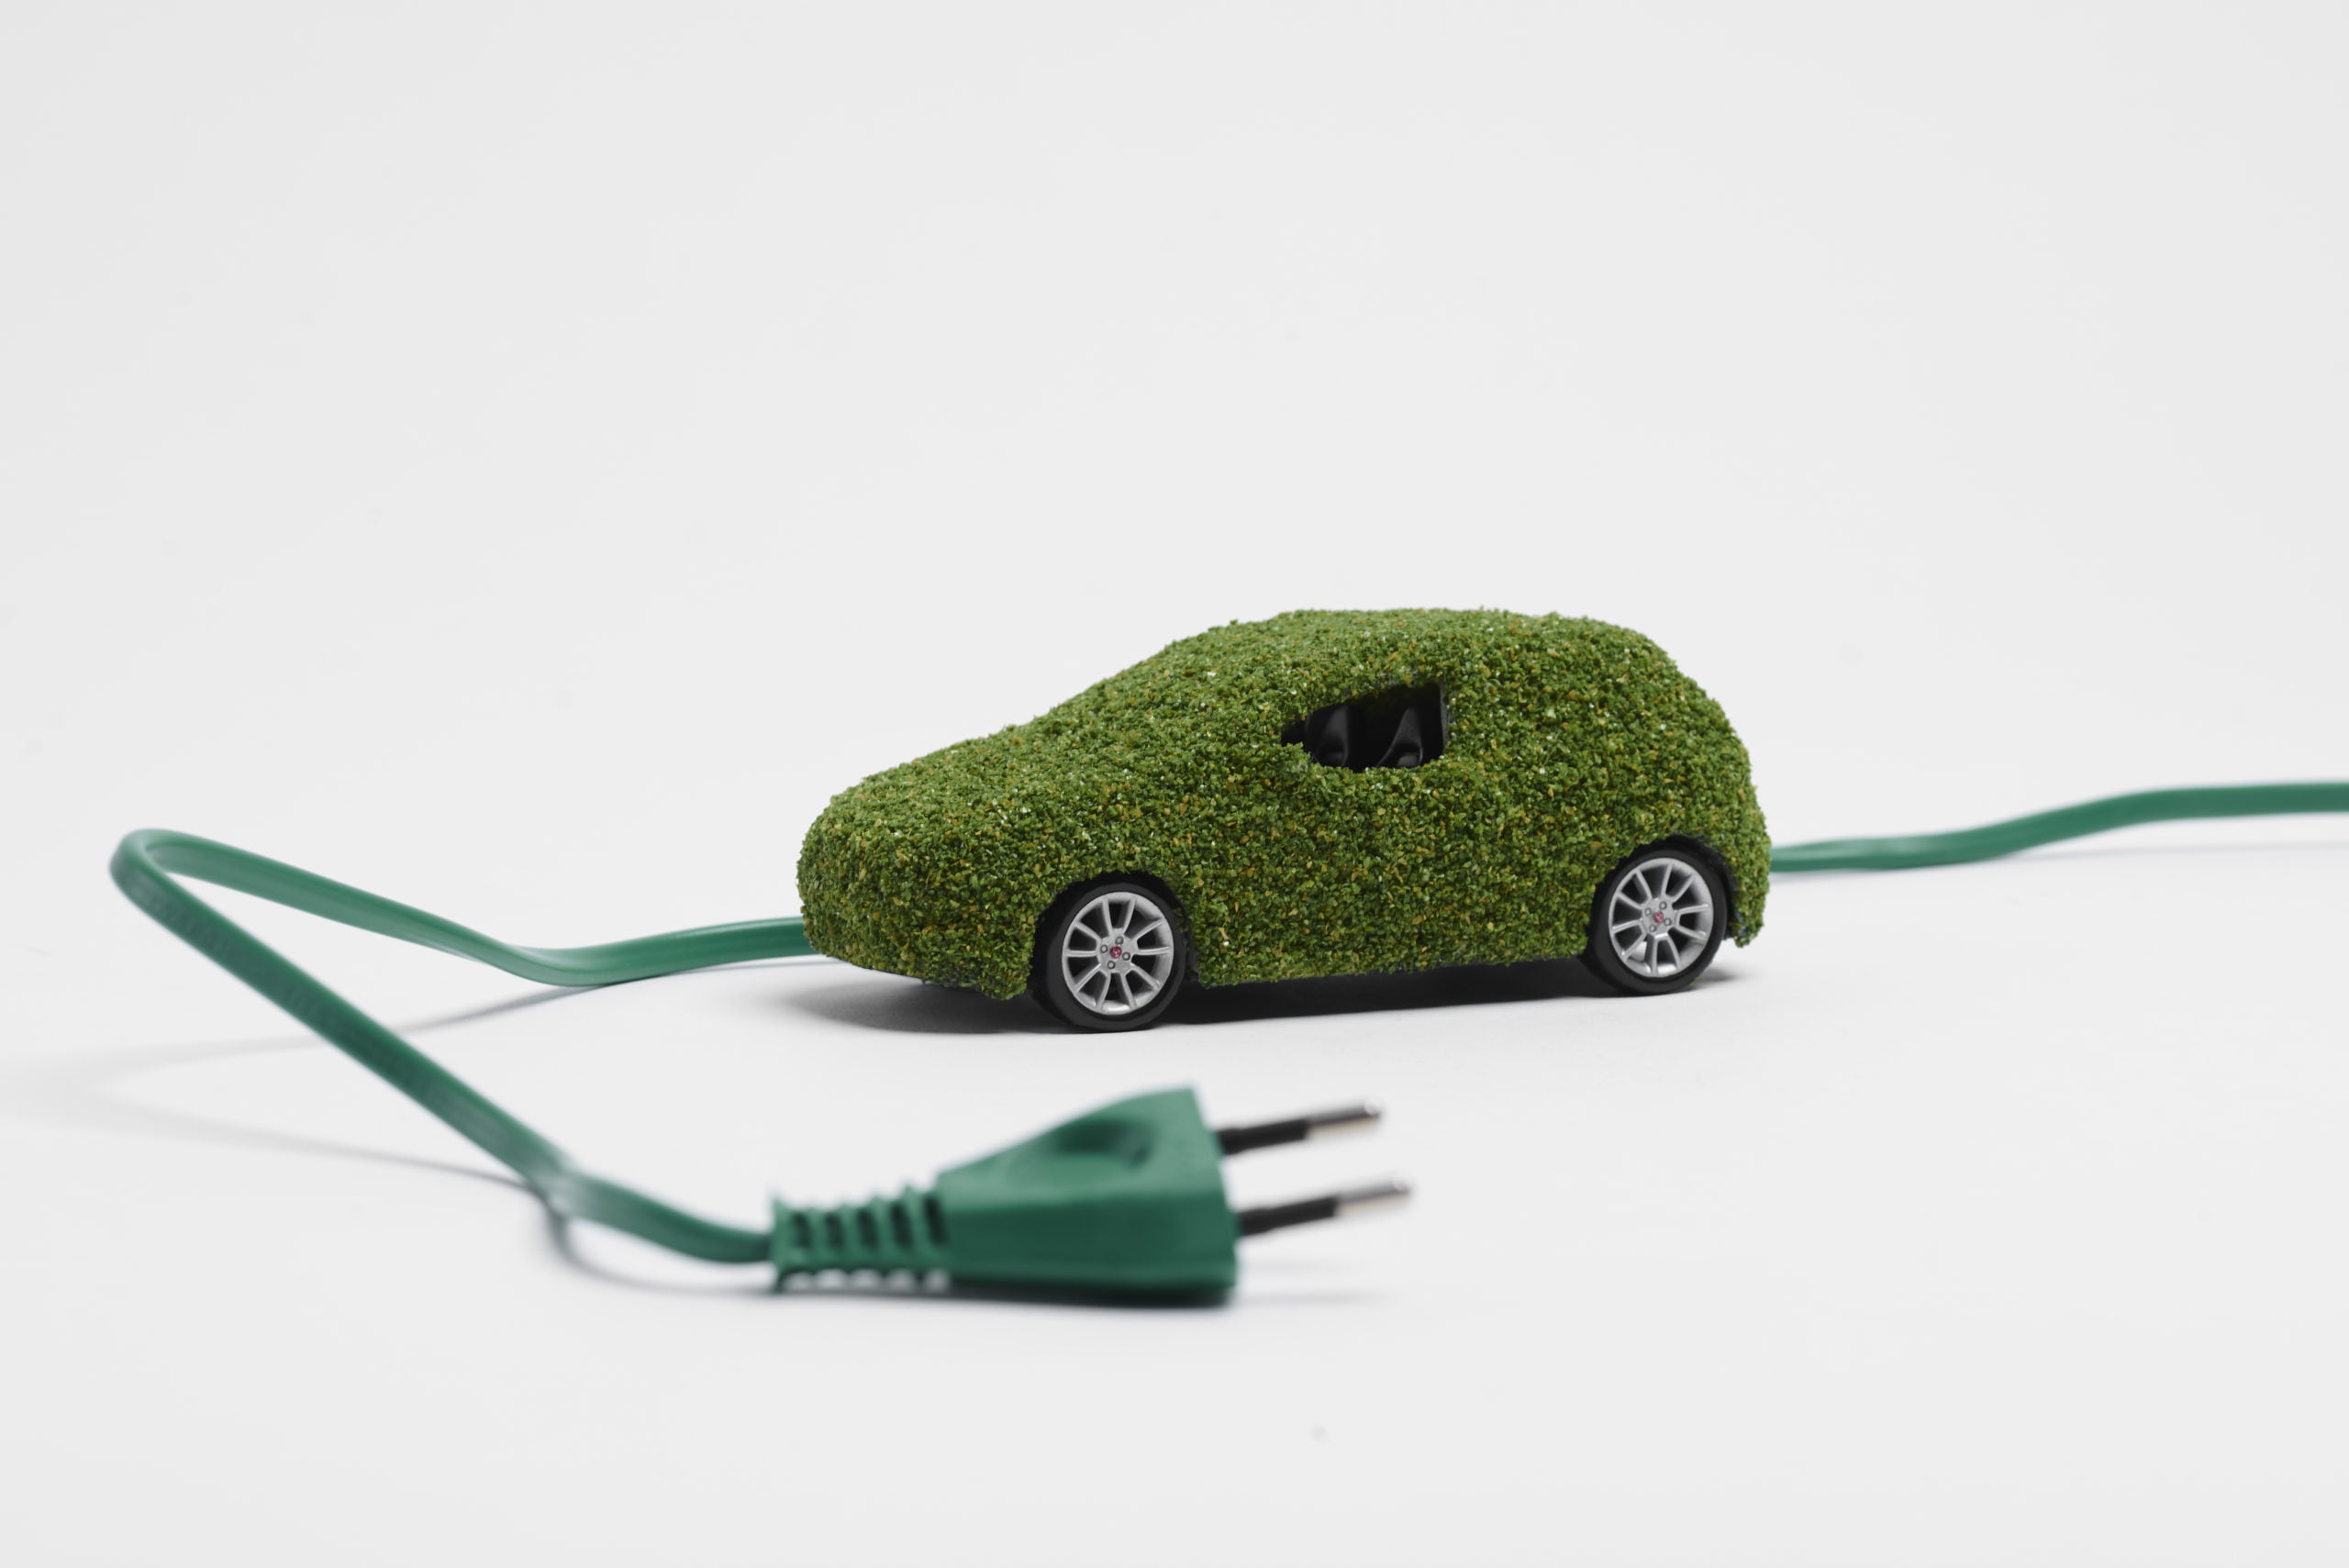 a green toy car